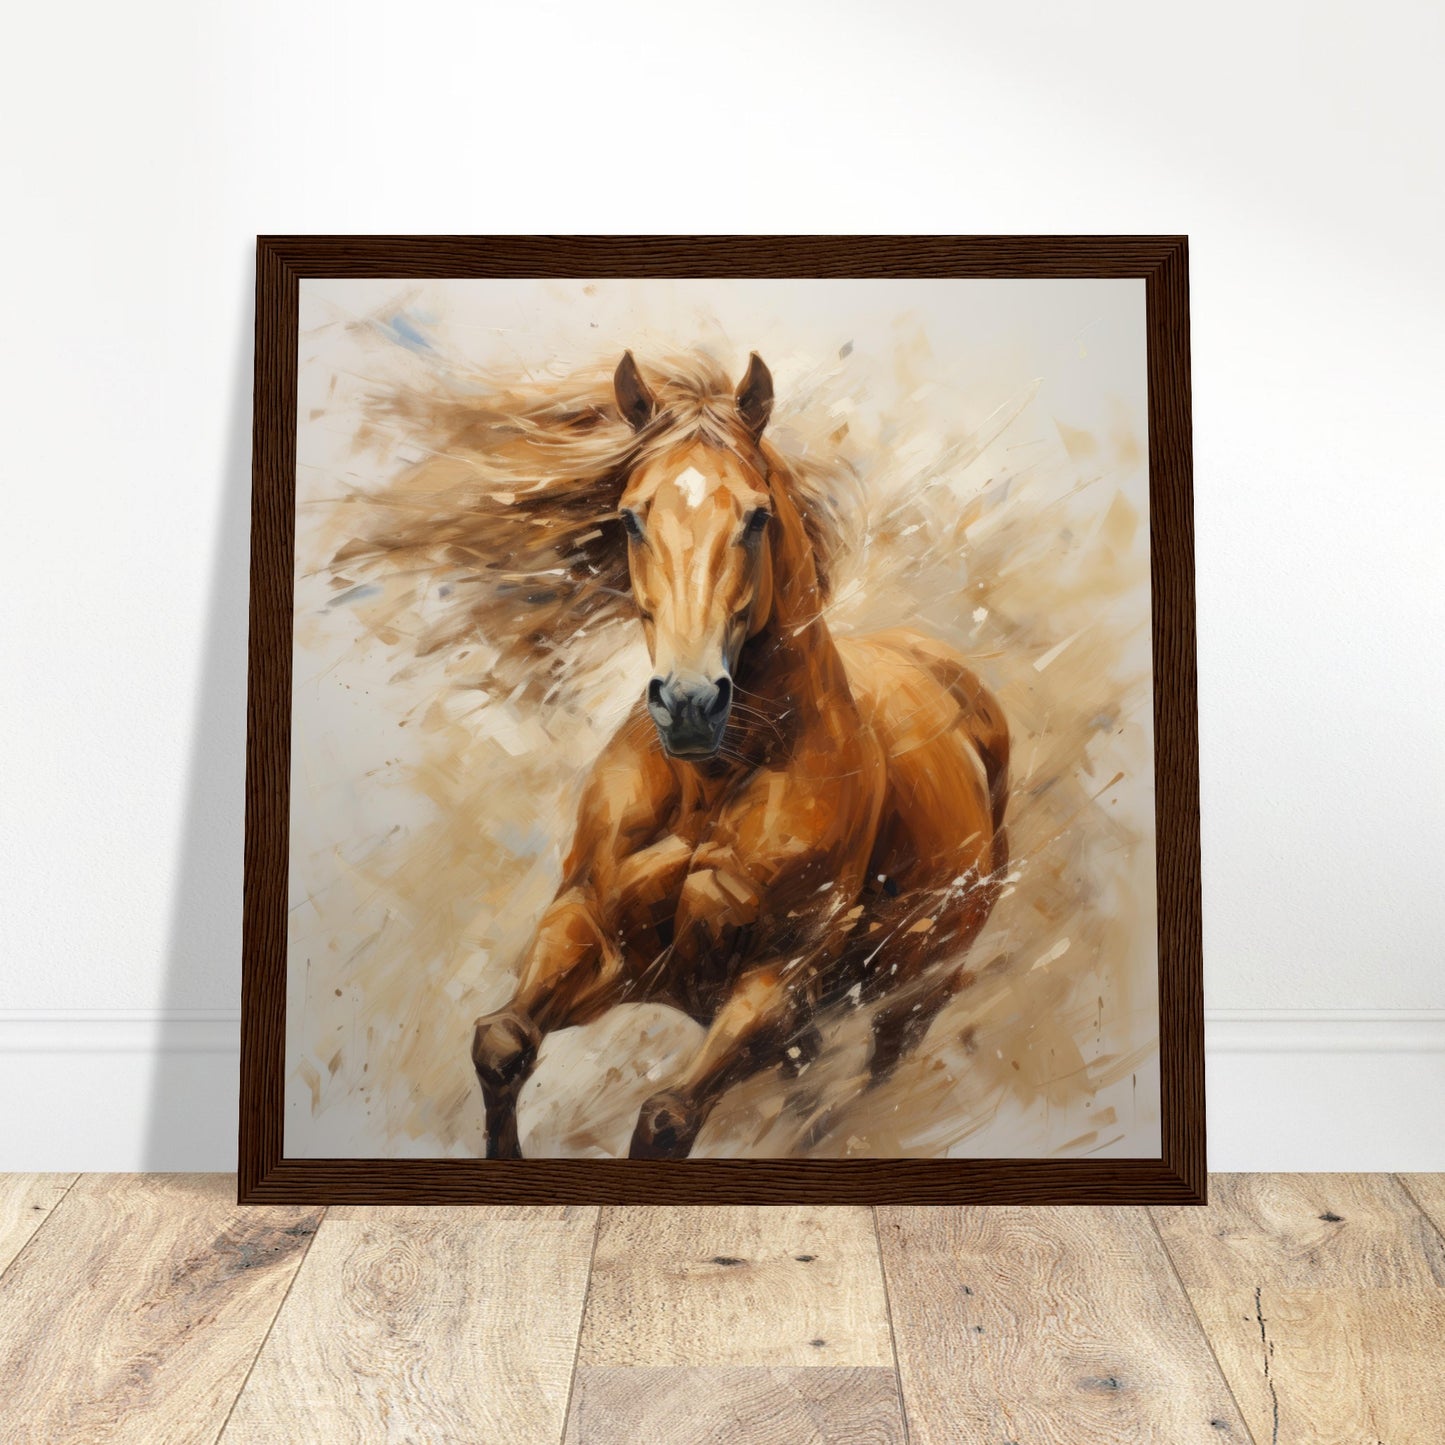 Equine Beauty #15 - Print Room Ltd Wood frame 70x70 cm / 28x28"